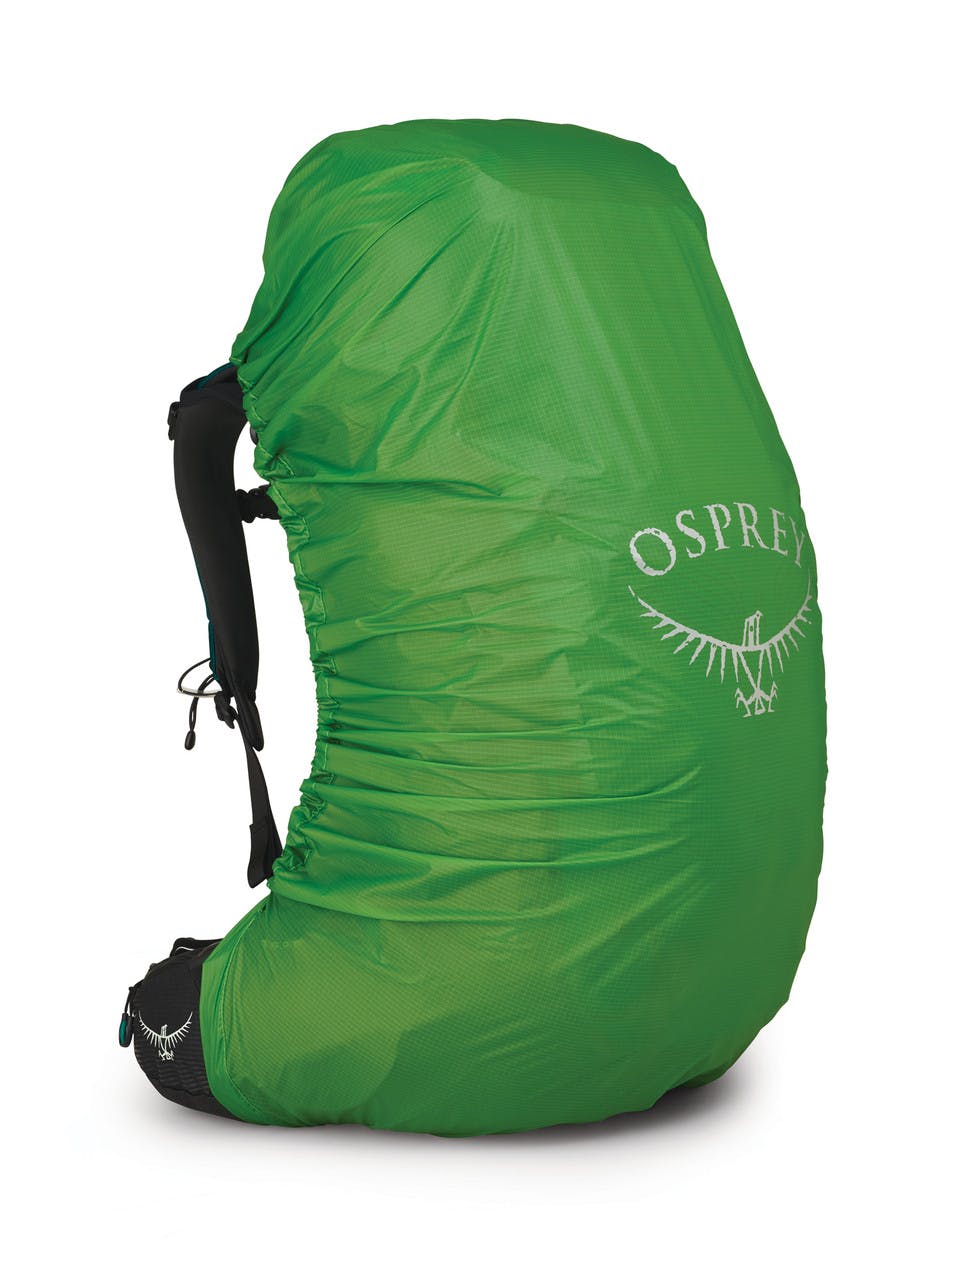 UNLTD AirScape 68 Backpack Green